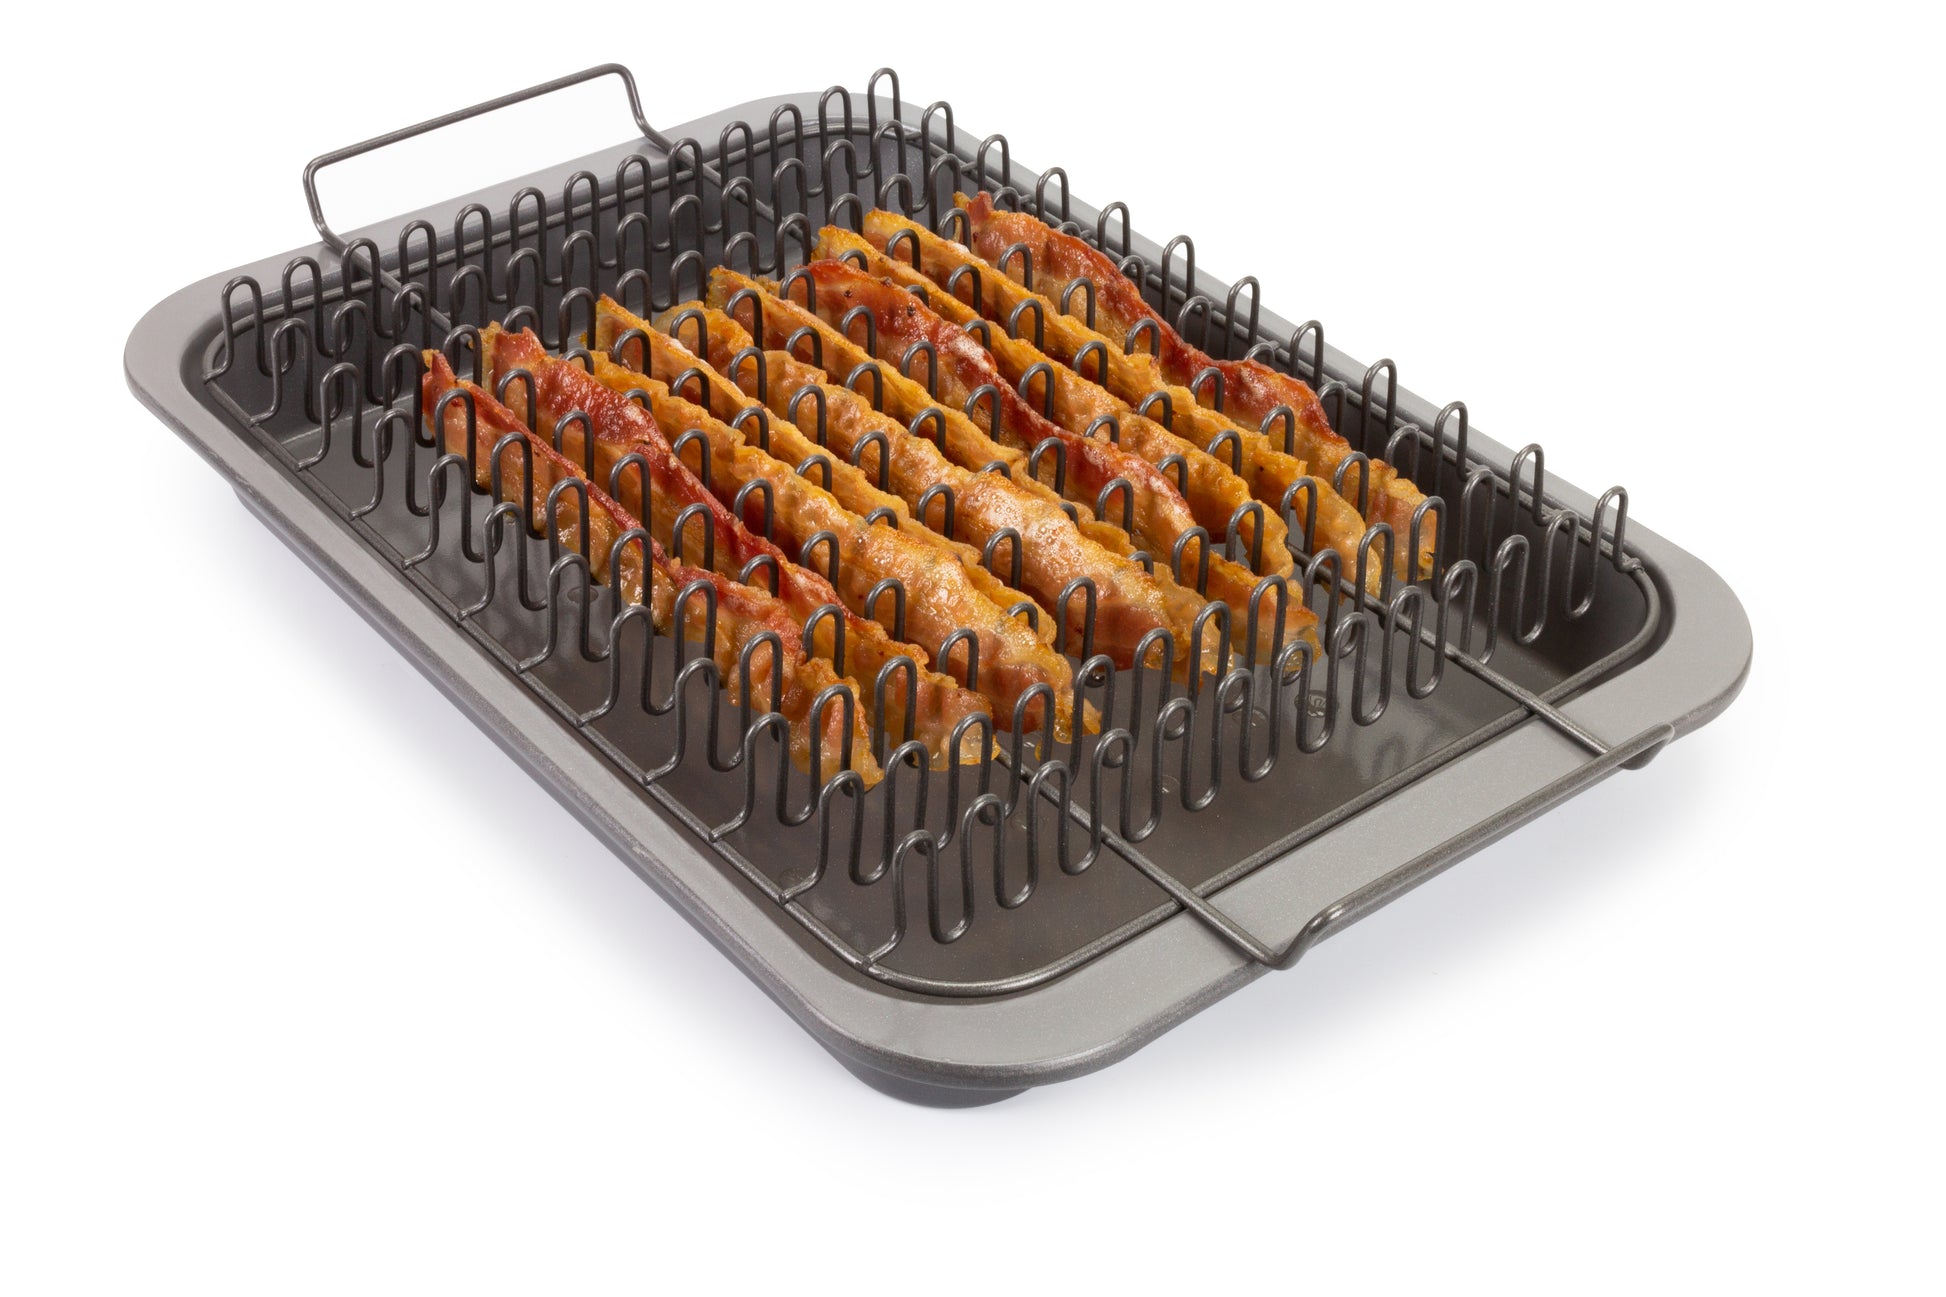 eazy mealz bacon rack + tray large, 2-pc set gray